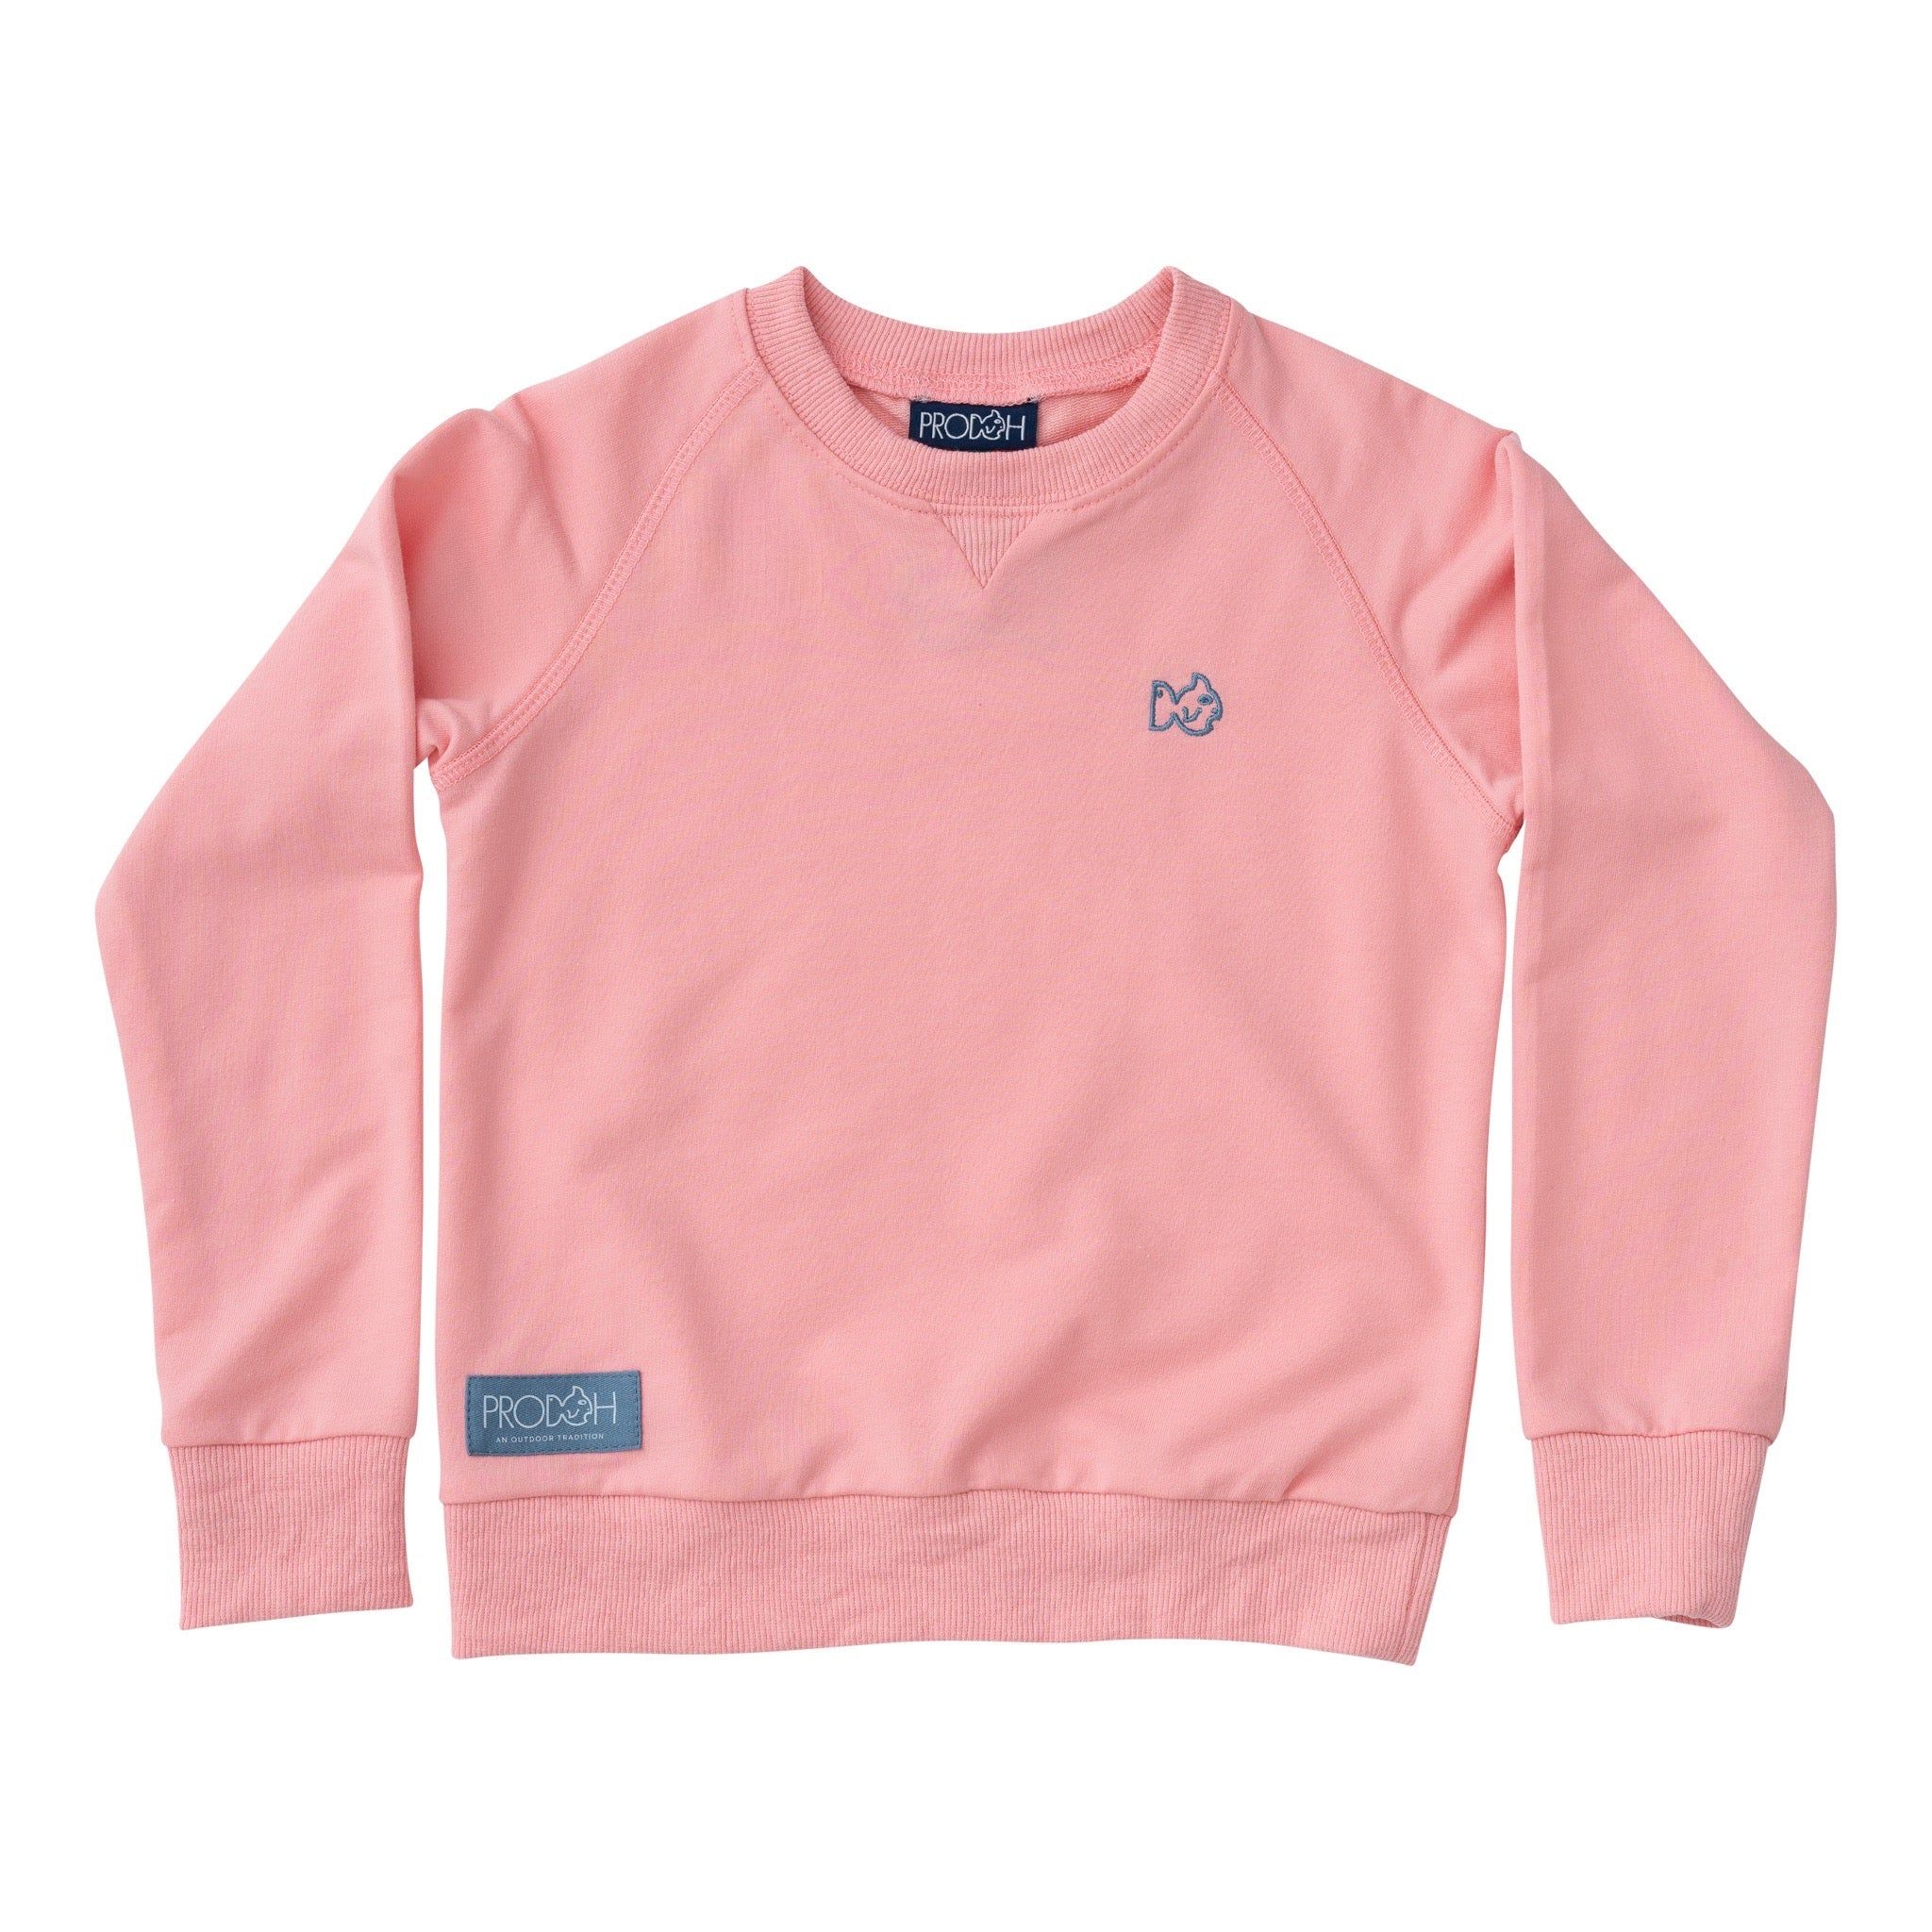 Crew Control Sweatshirt in Murex Shell Pink | PRODOH